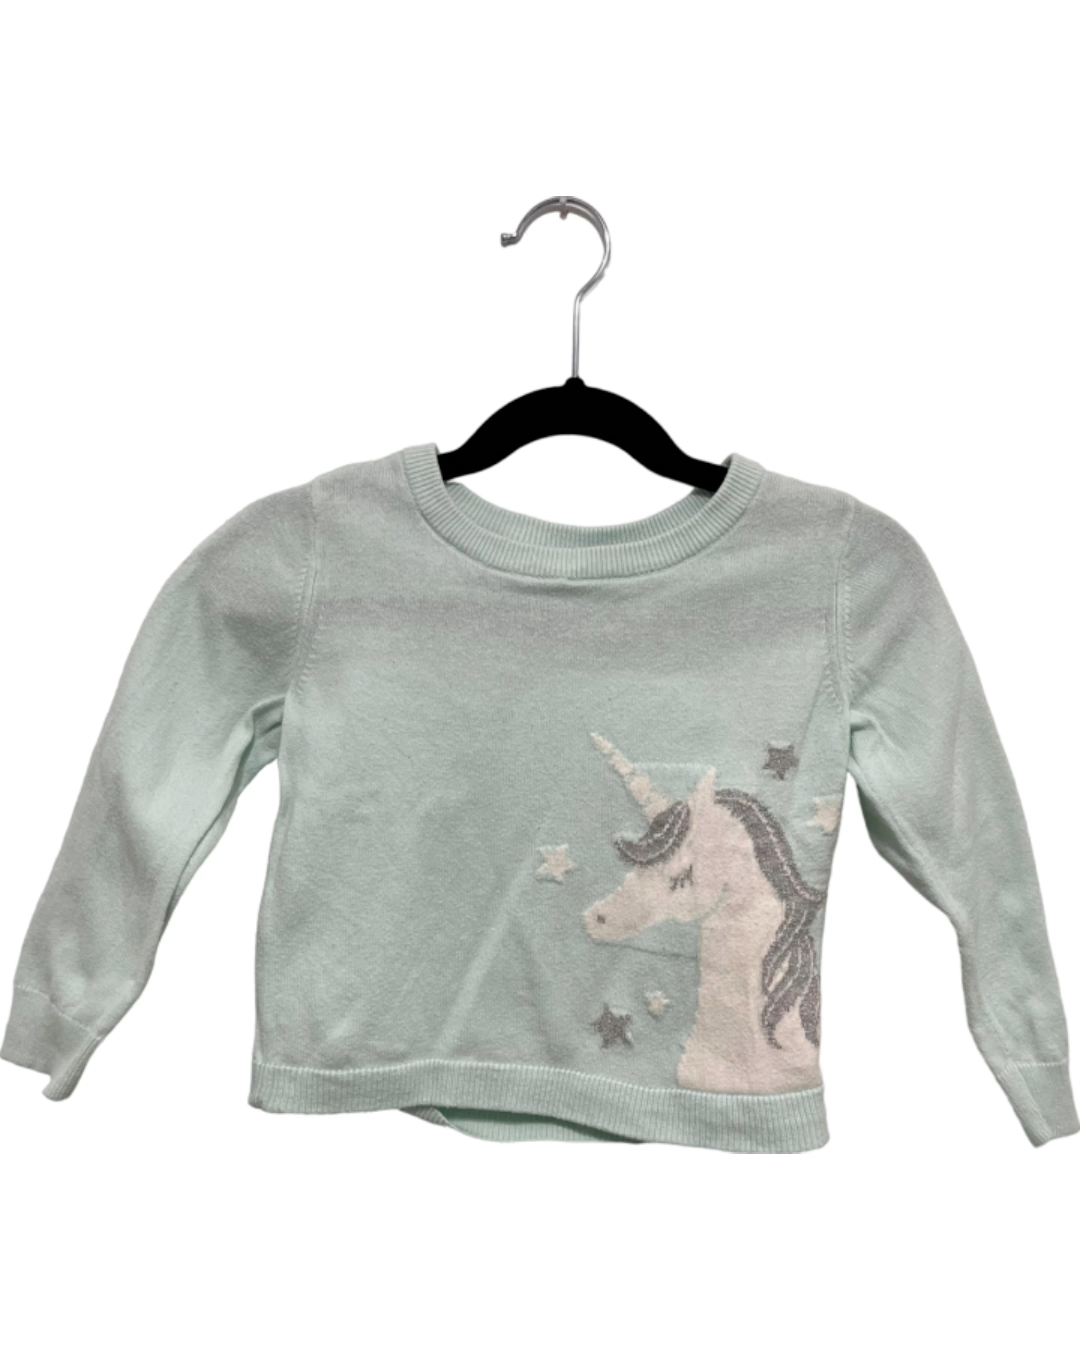 Baby Gap Unicorn Long Sleeve Shirt (3T)